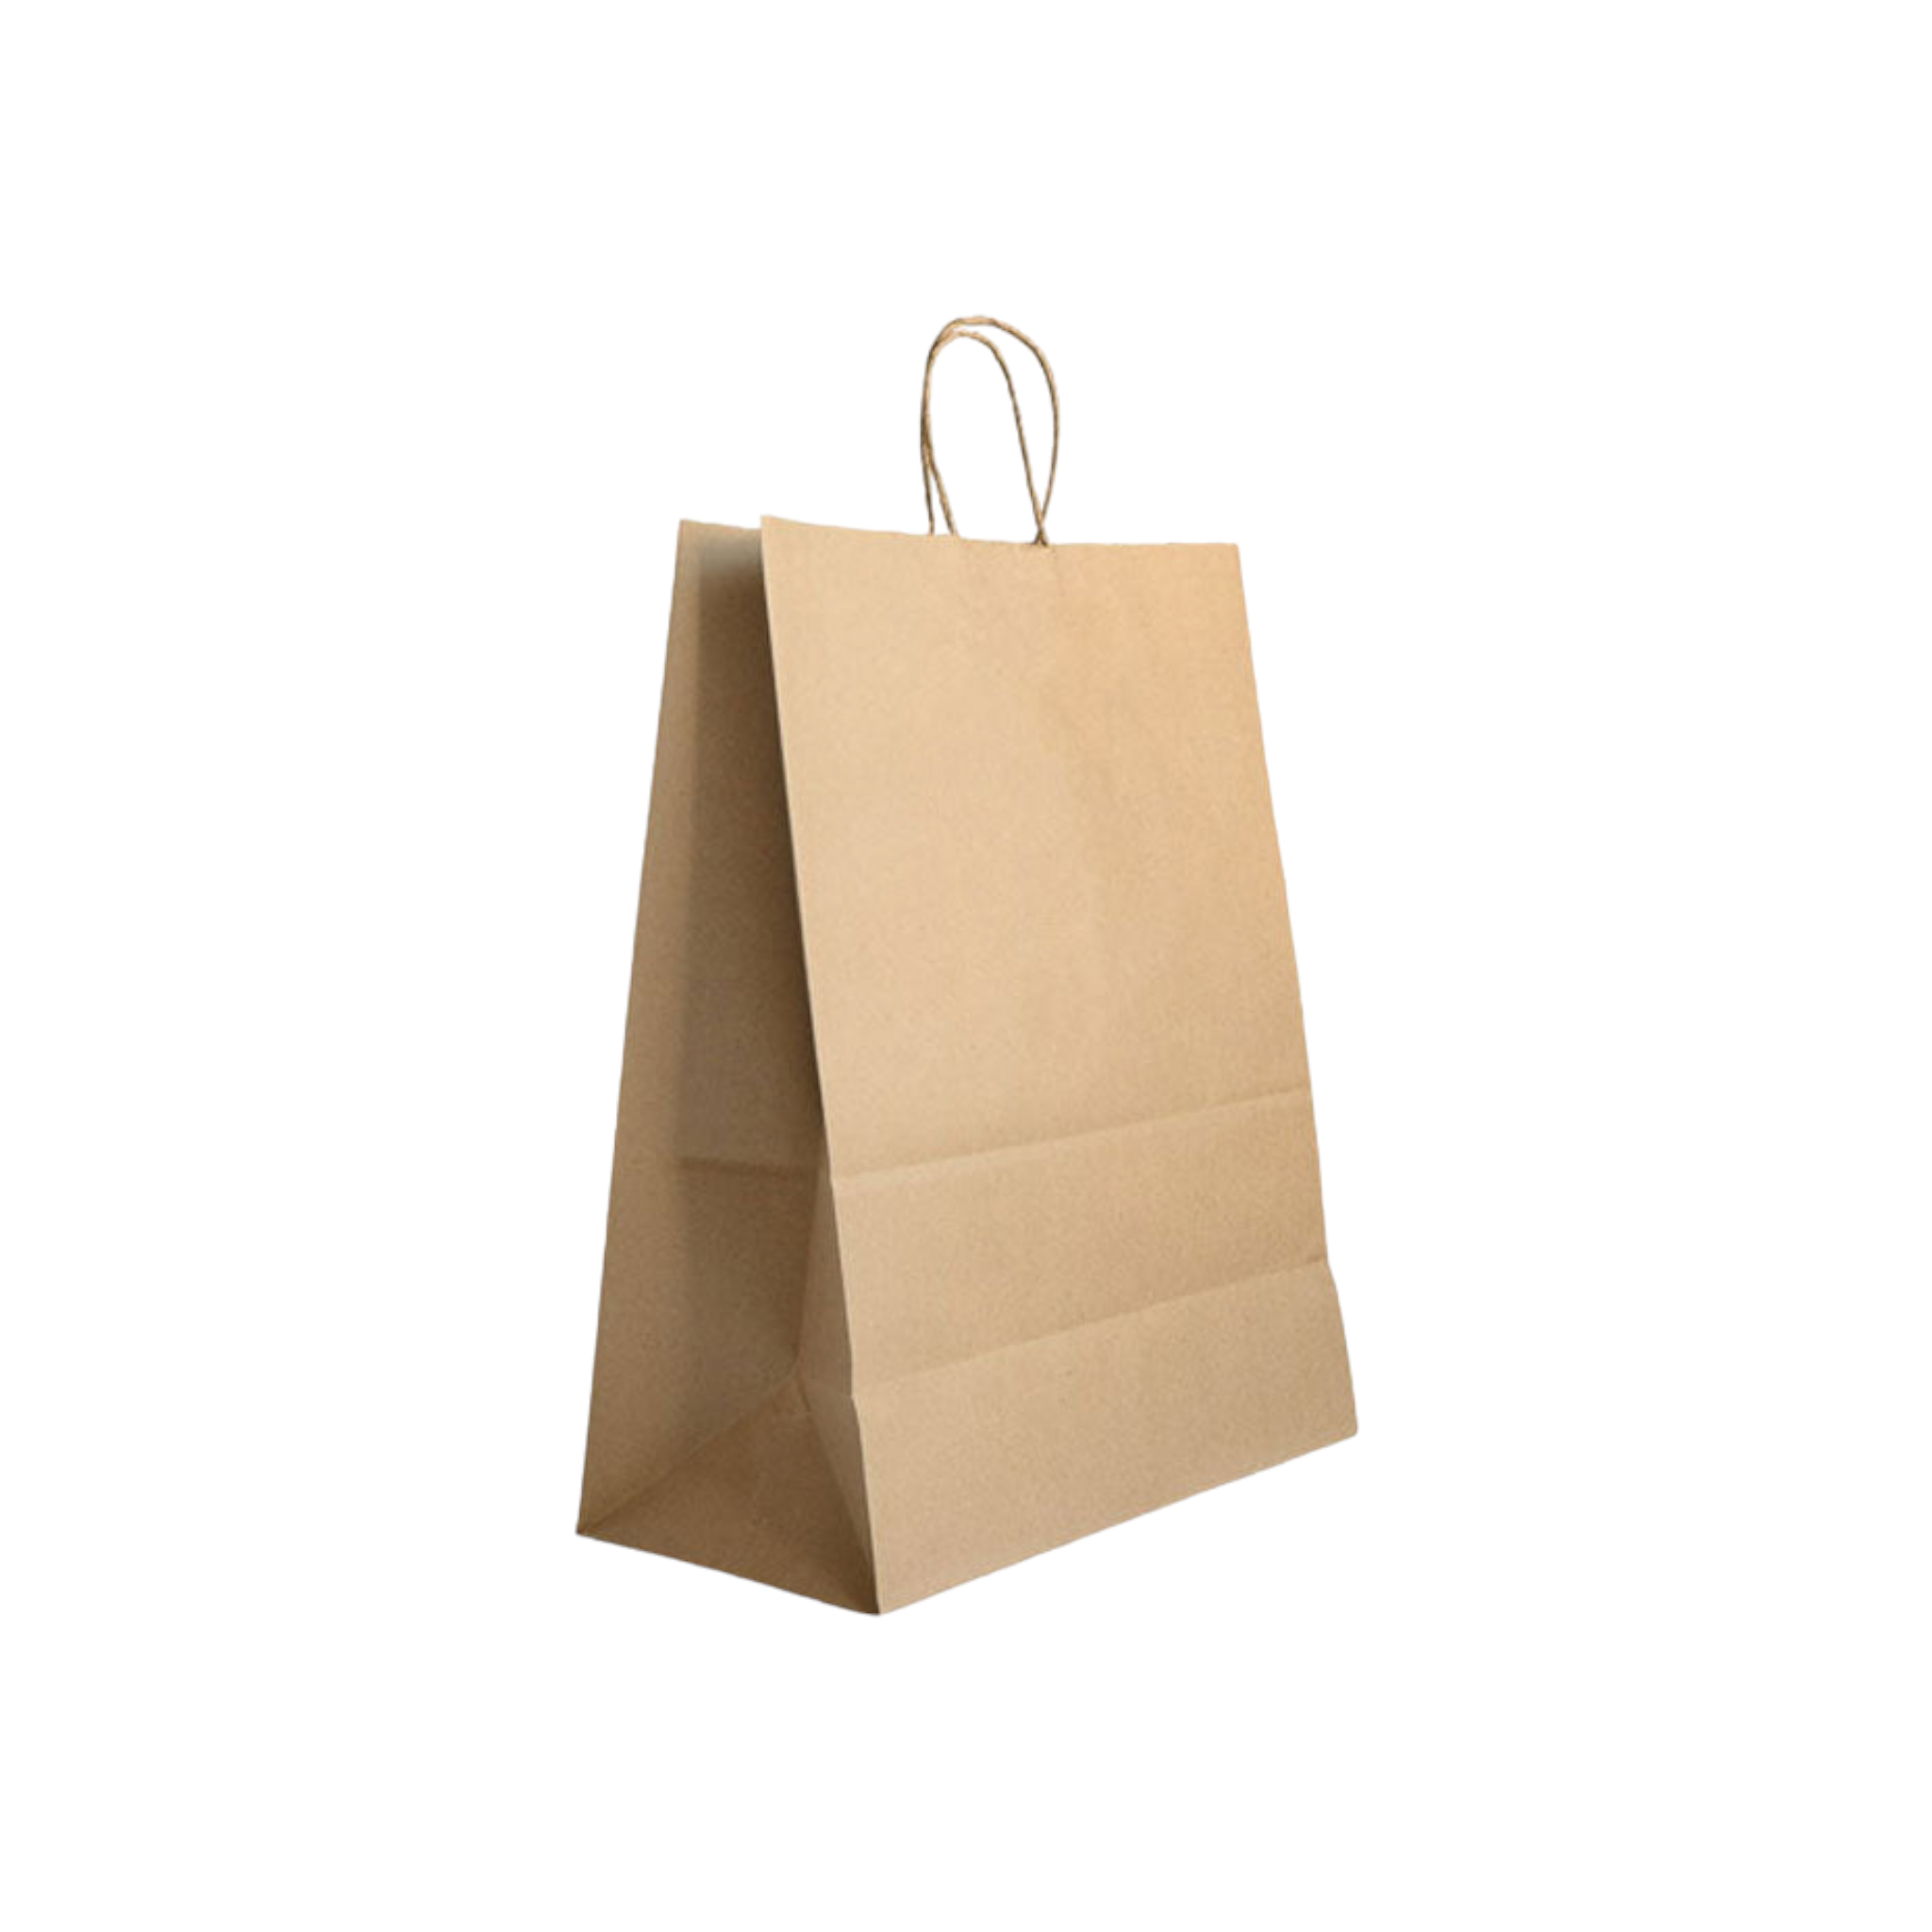 M Kraft Gift Bag Handypack Brown Gussted Bag 42x30x14.5cm with Twist Handles